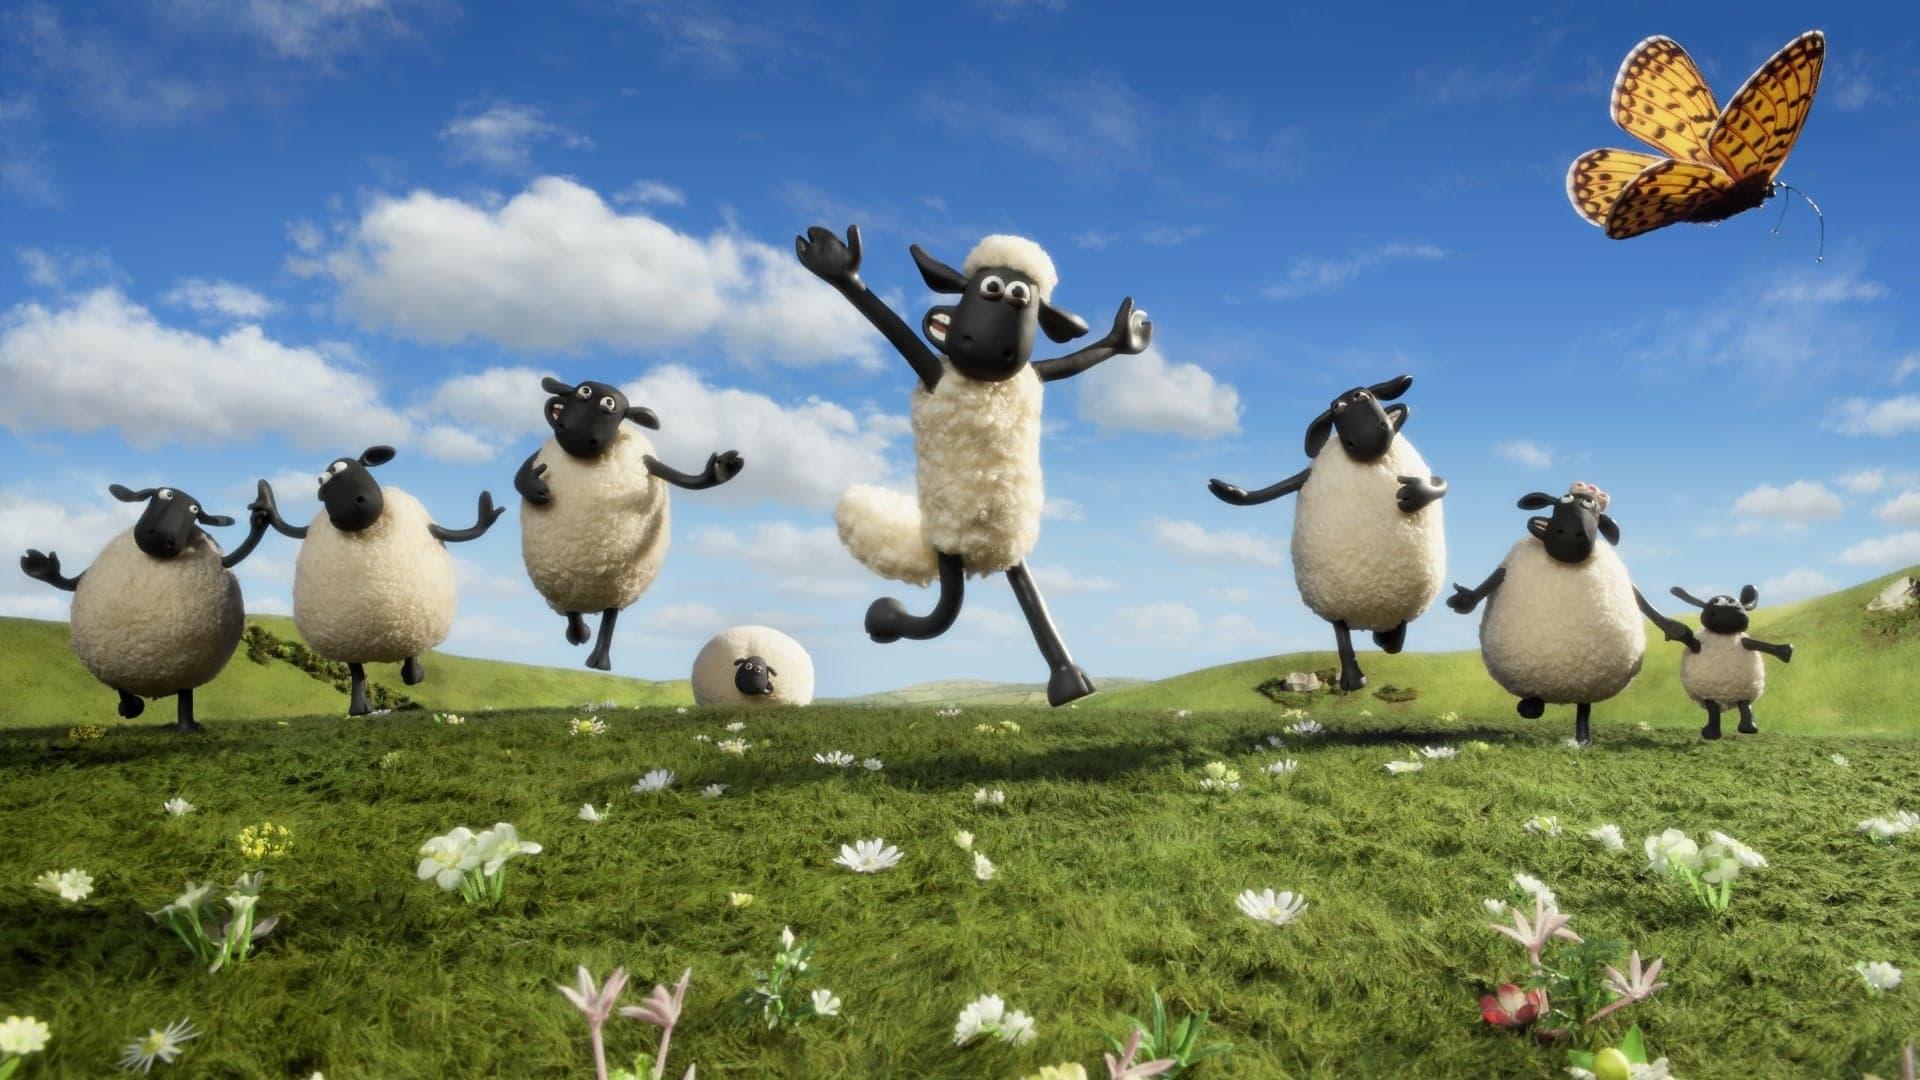 Shaun the Sheep: Shear Madness backdrop